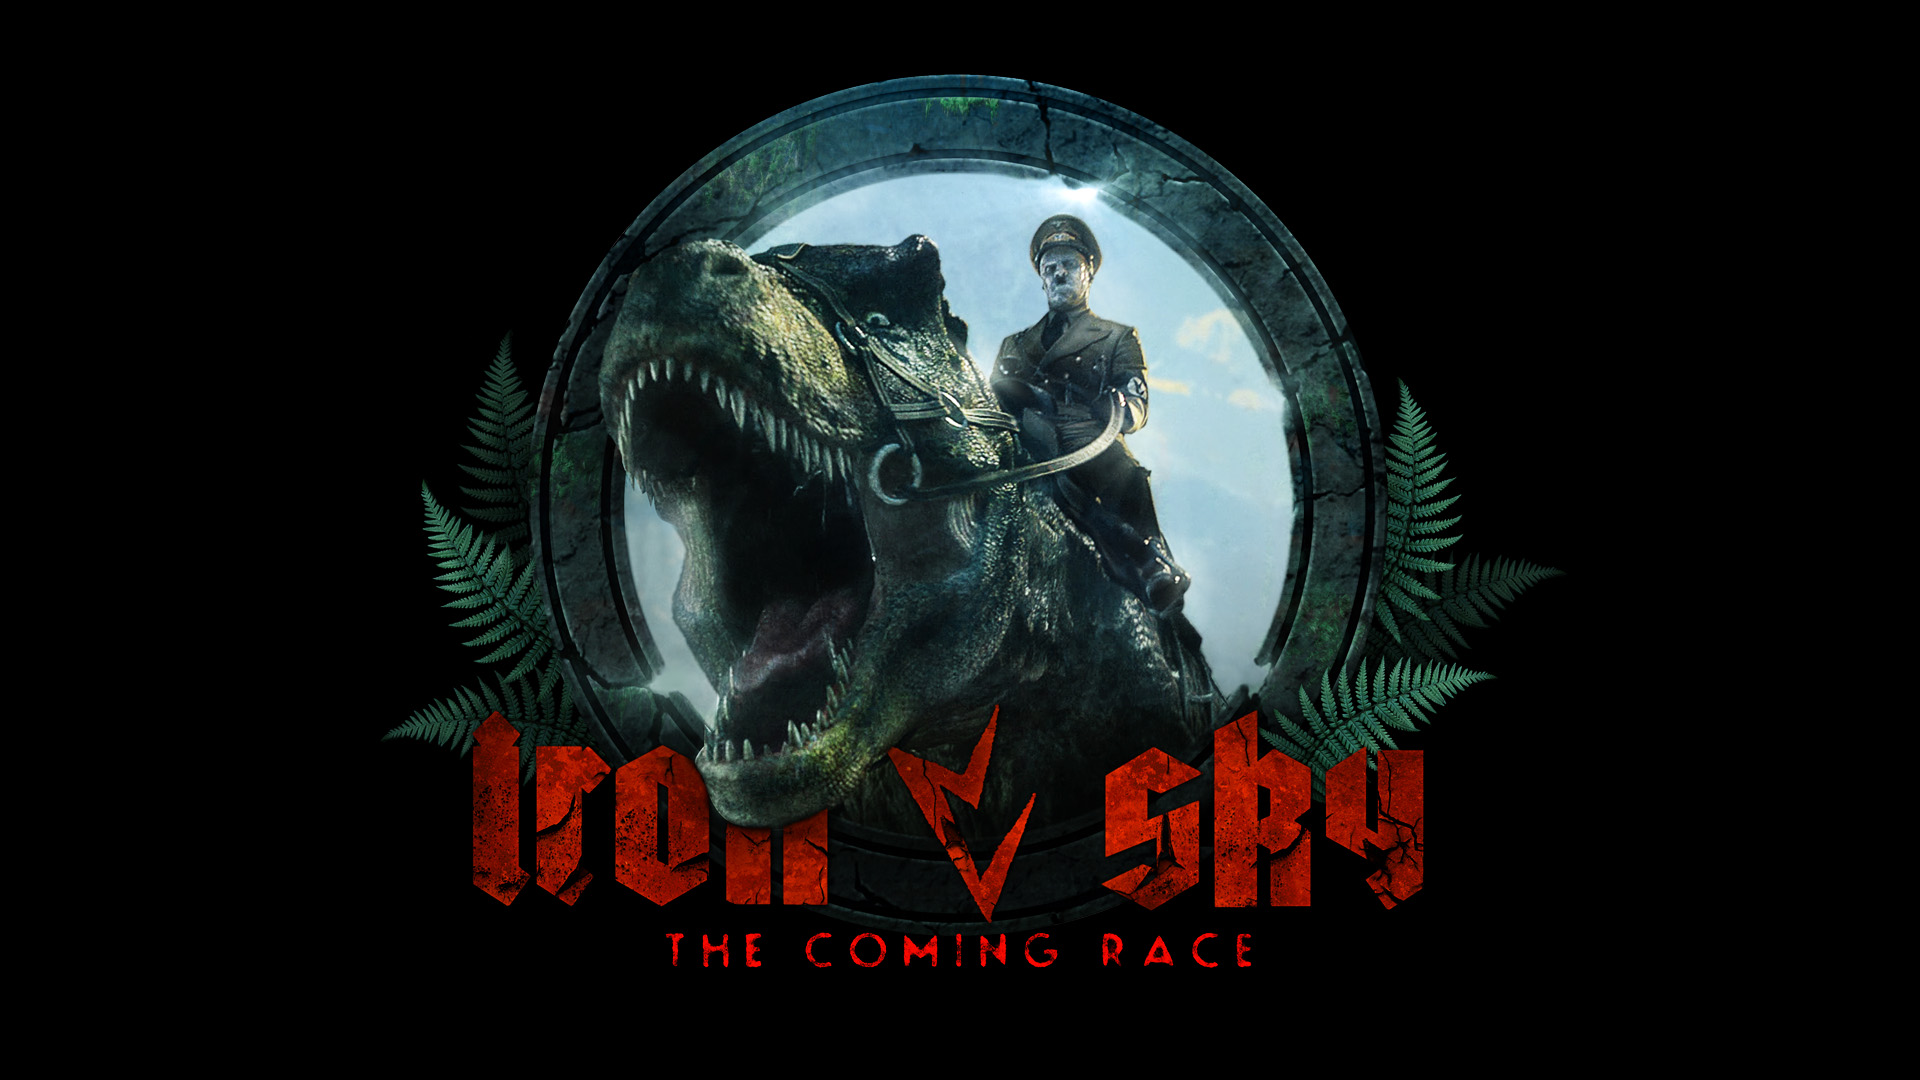 IRON SKY The Coming Race